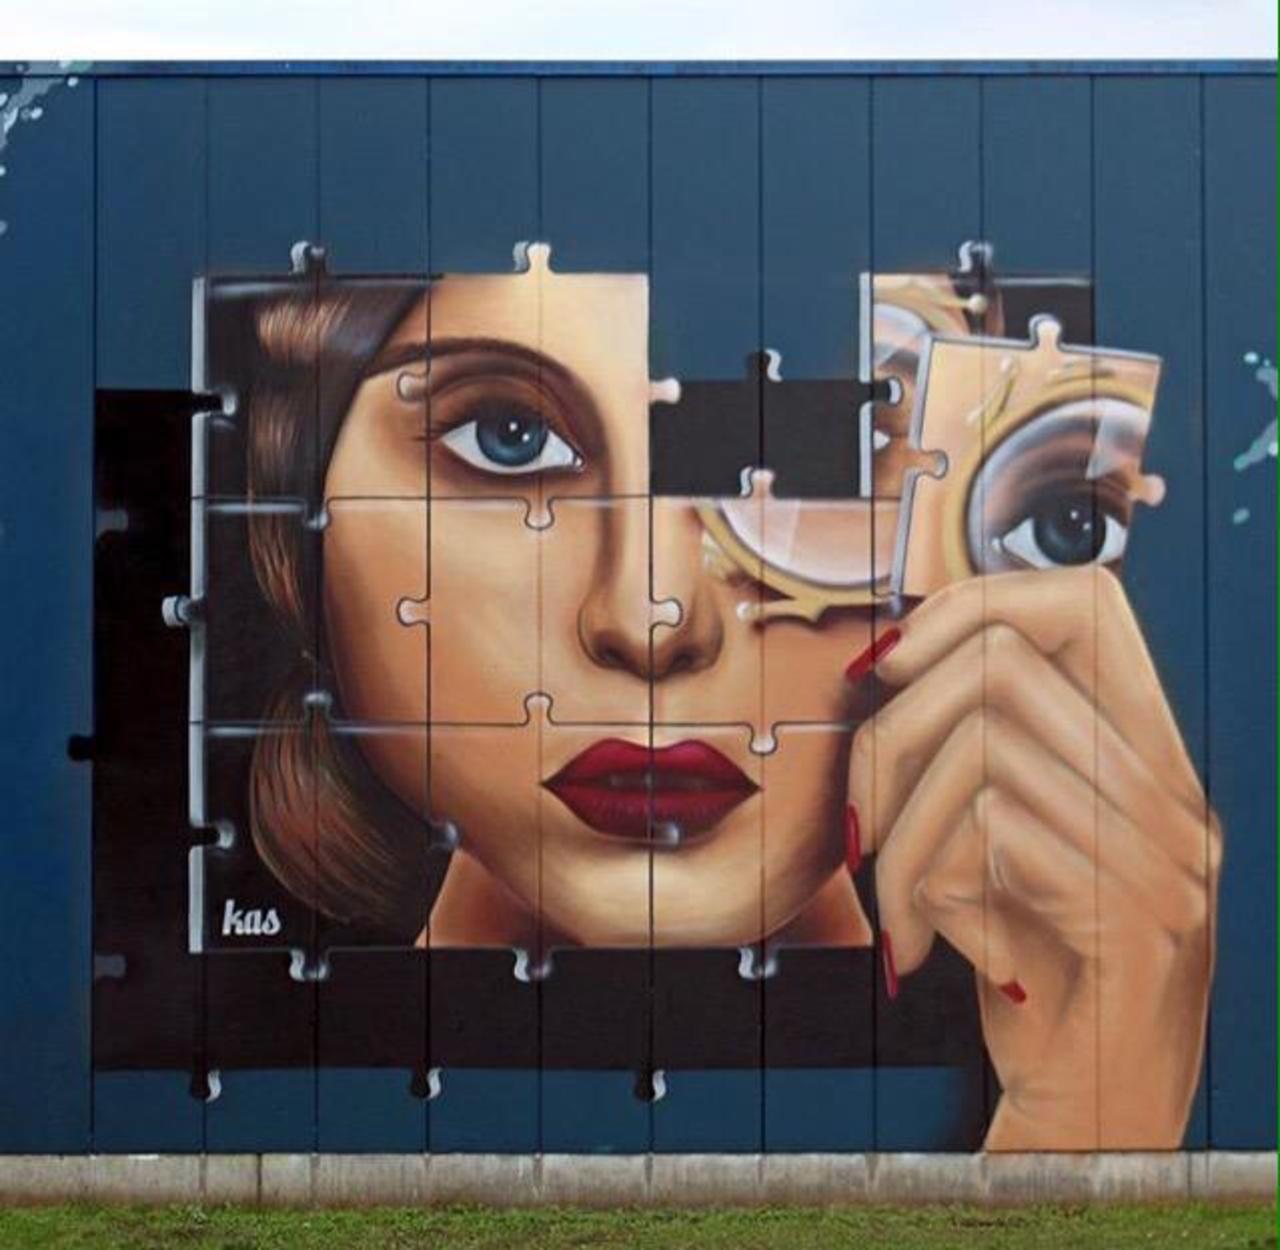 Kas Art's new Street Art "Piece of me" in Aalst Belgium 

#art #graffiti #mural #streetart http://t.co/Y3OvAas9Wg